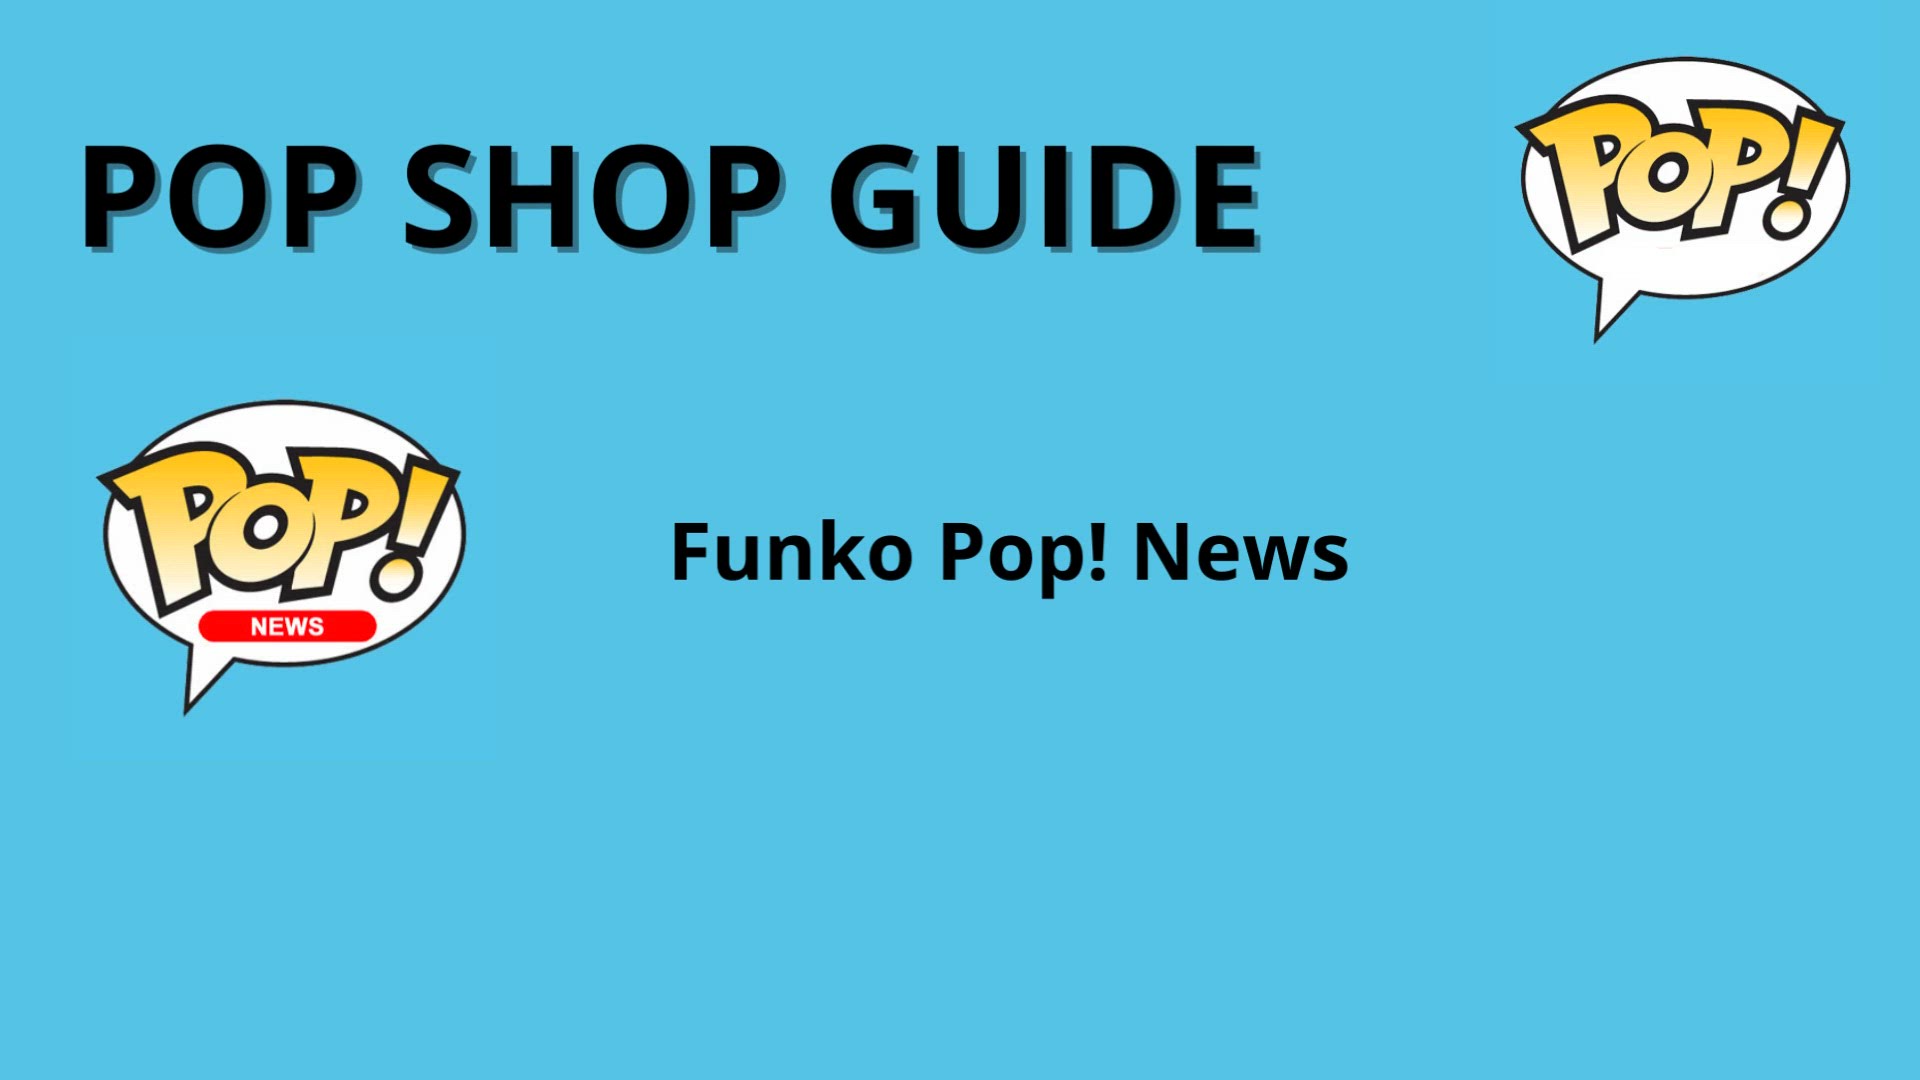 2019-20 Funko POP NHL List, Details, Exclusives, Gallery